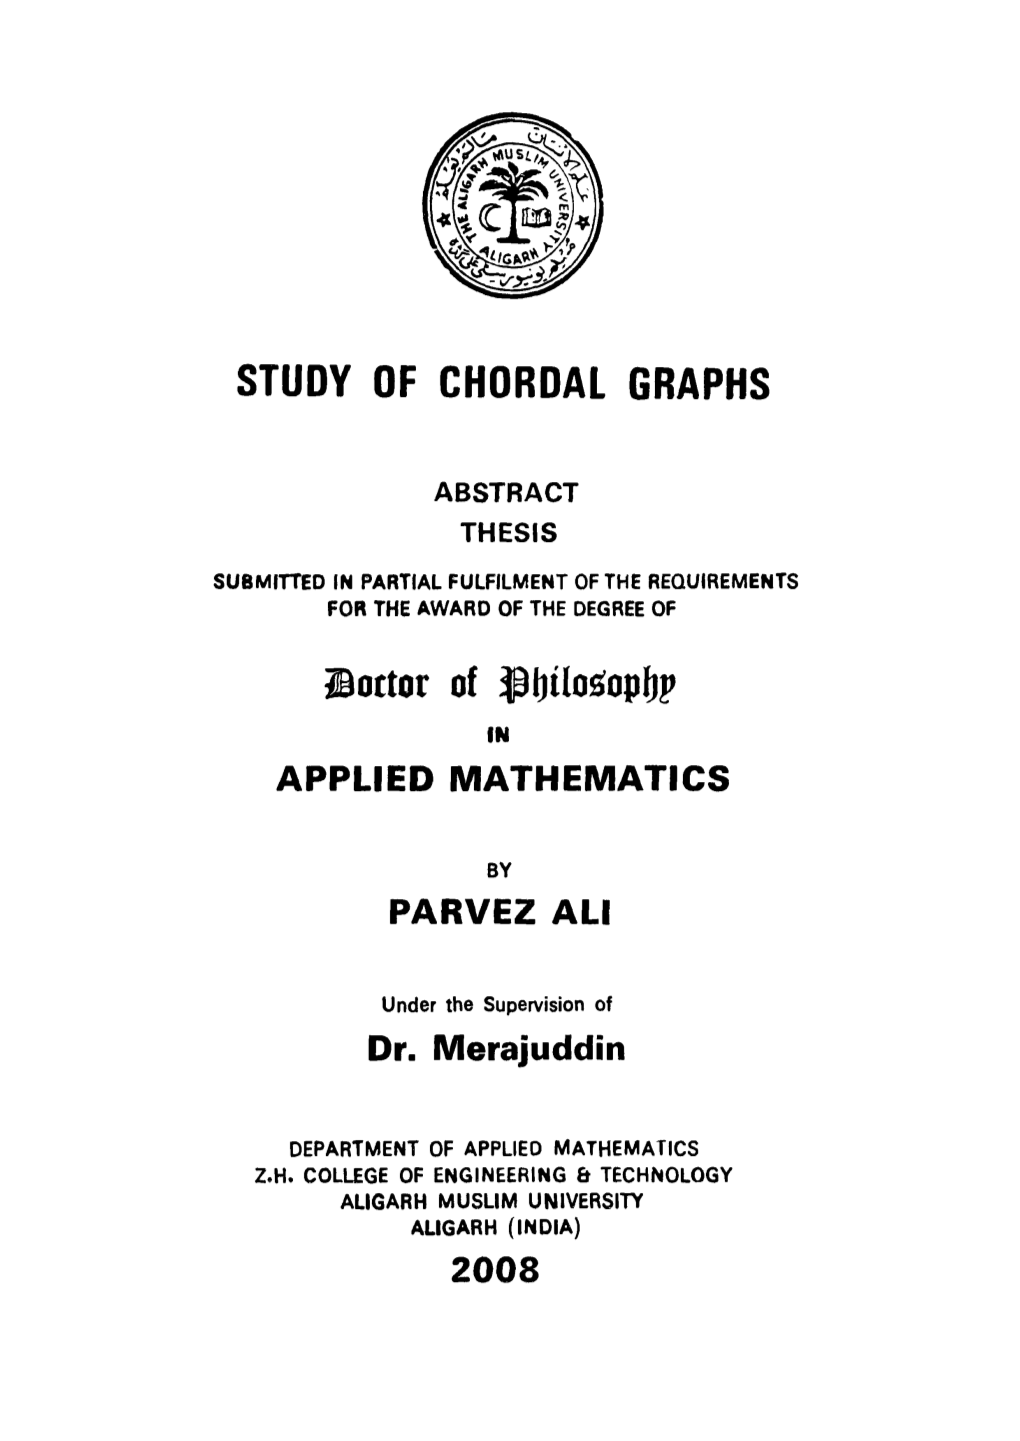 Study of Chordal Graphs